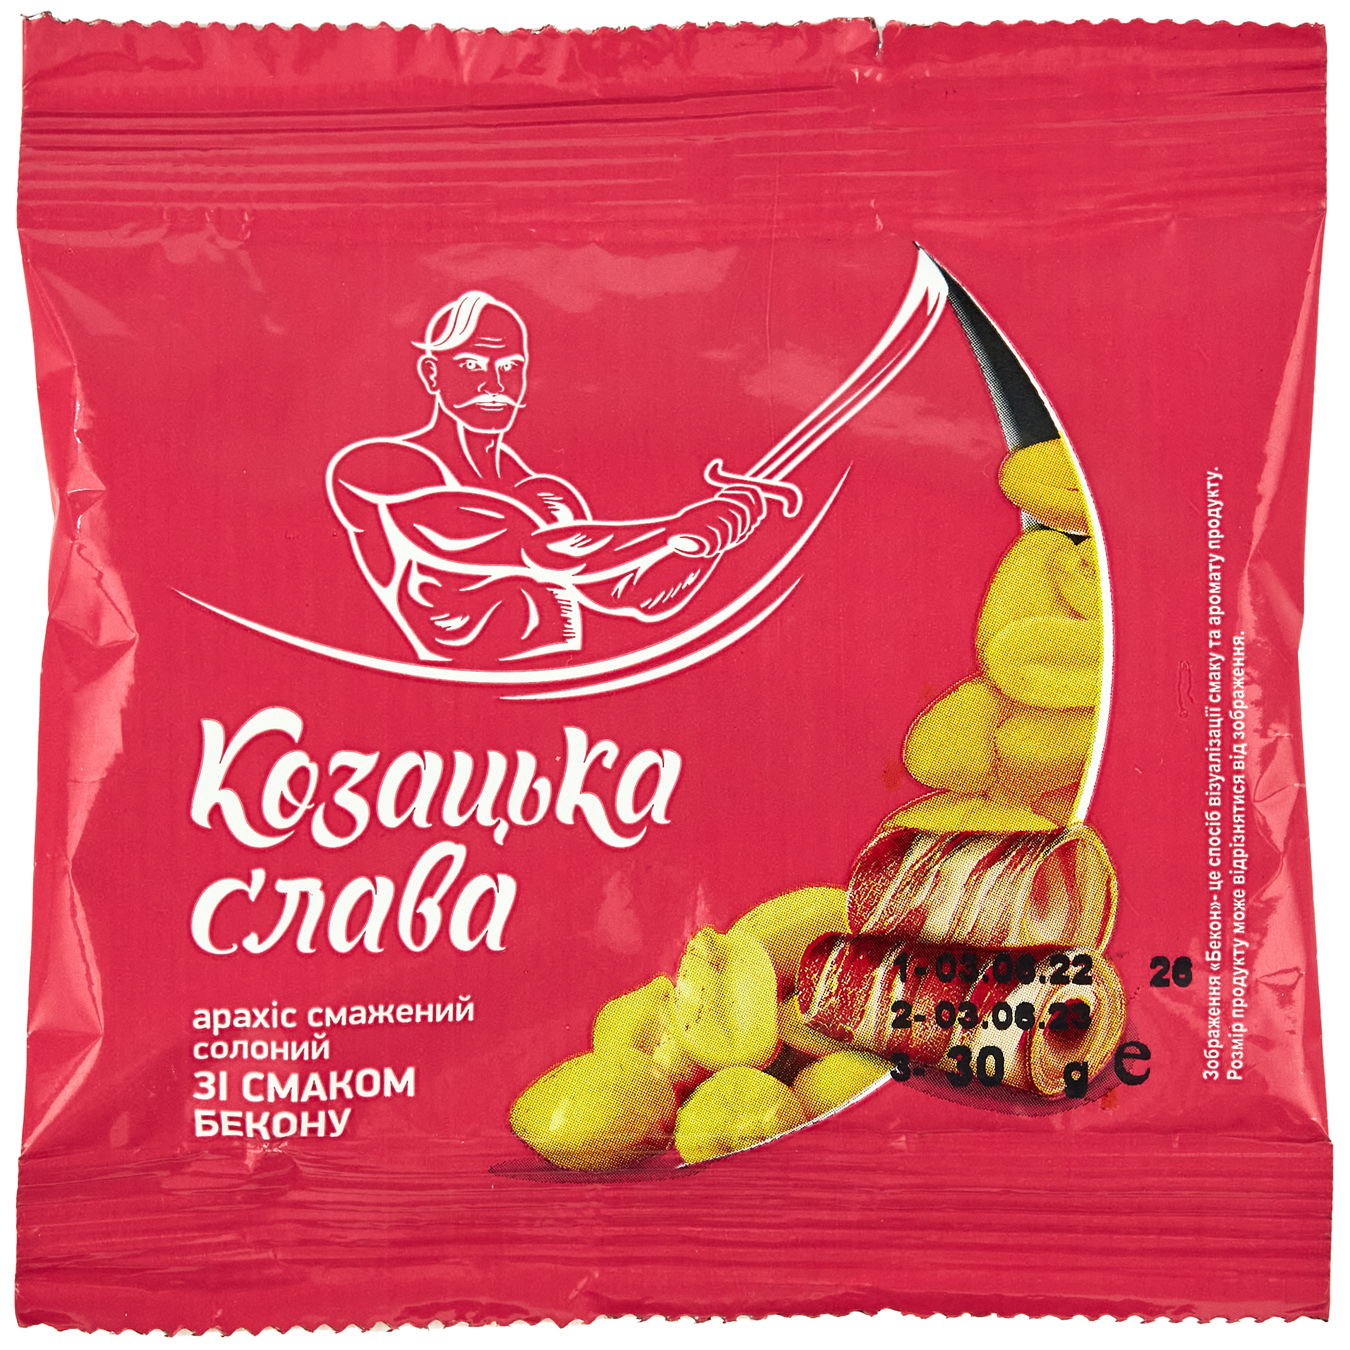 Kazatskaya famous salted peanuts with a taste of bacon 30g